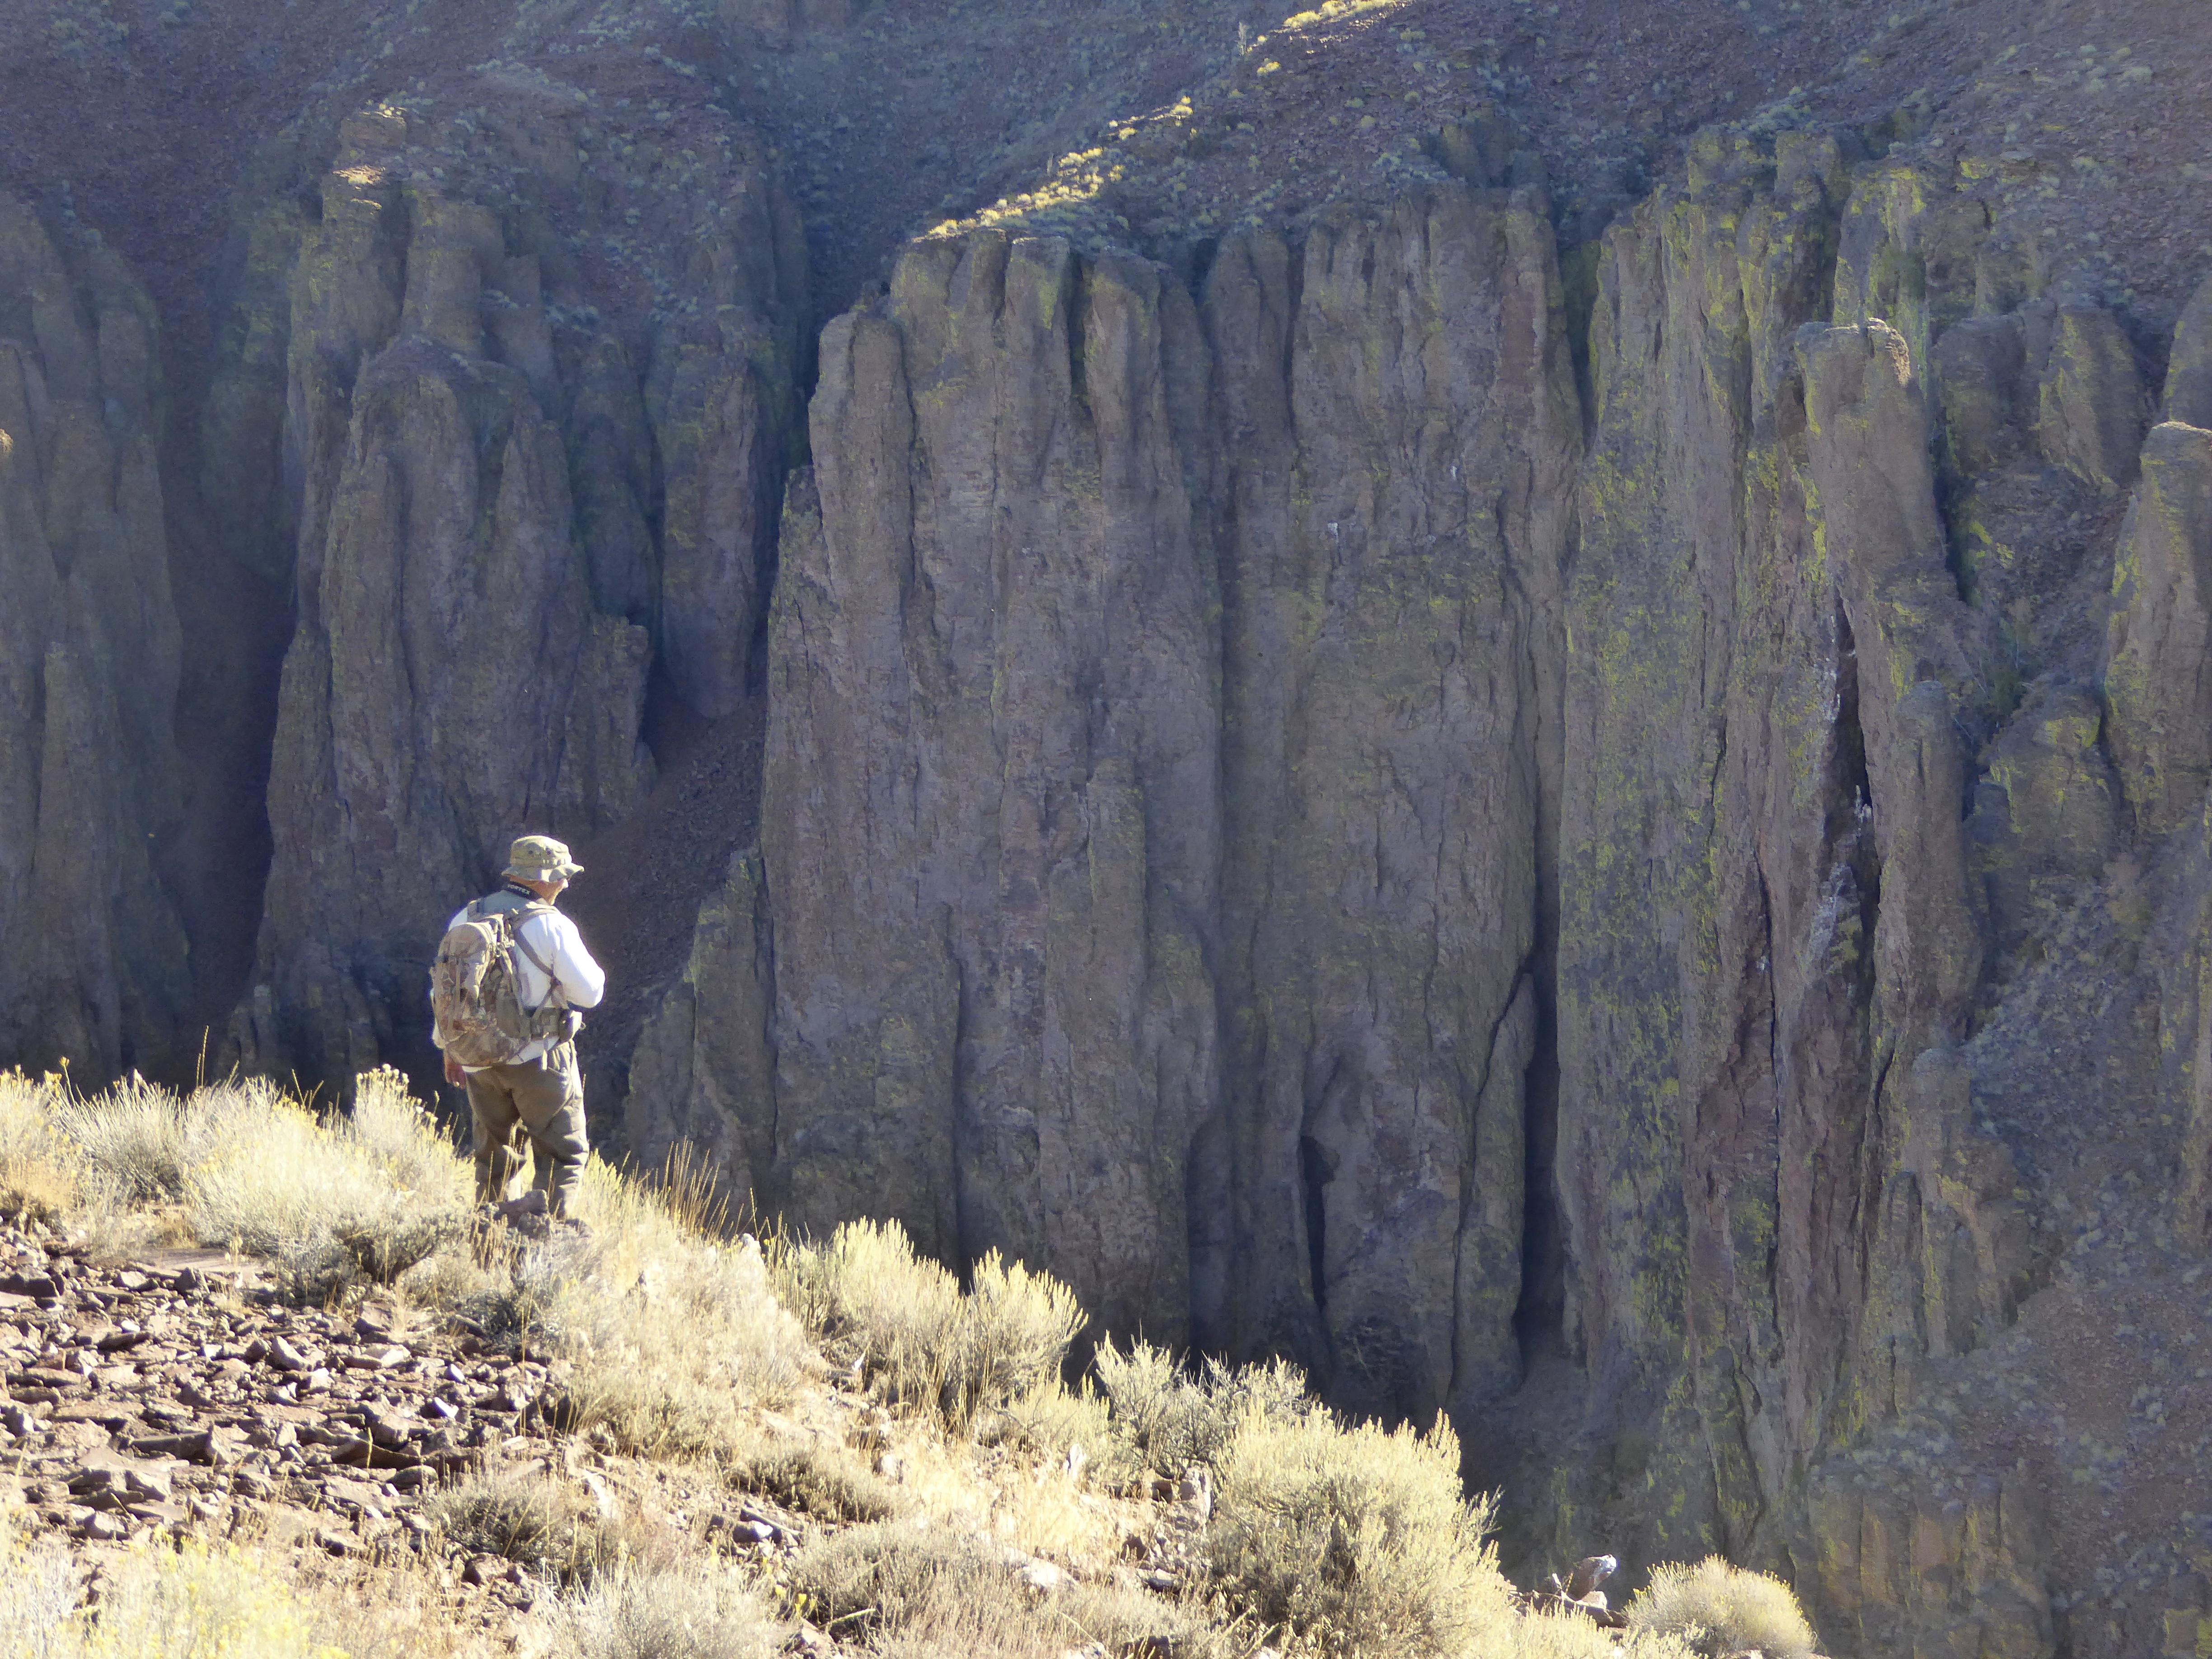 Man standing near cliffs in the Owyhees.